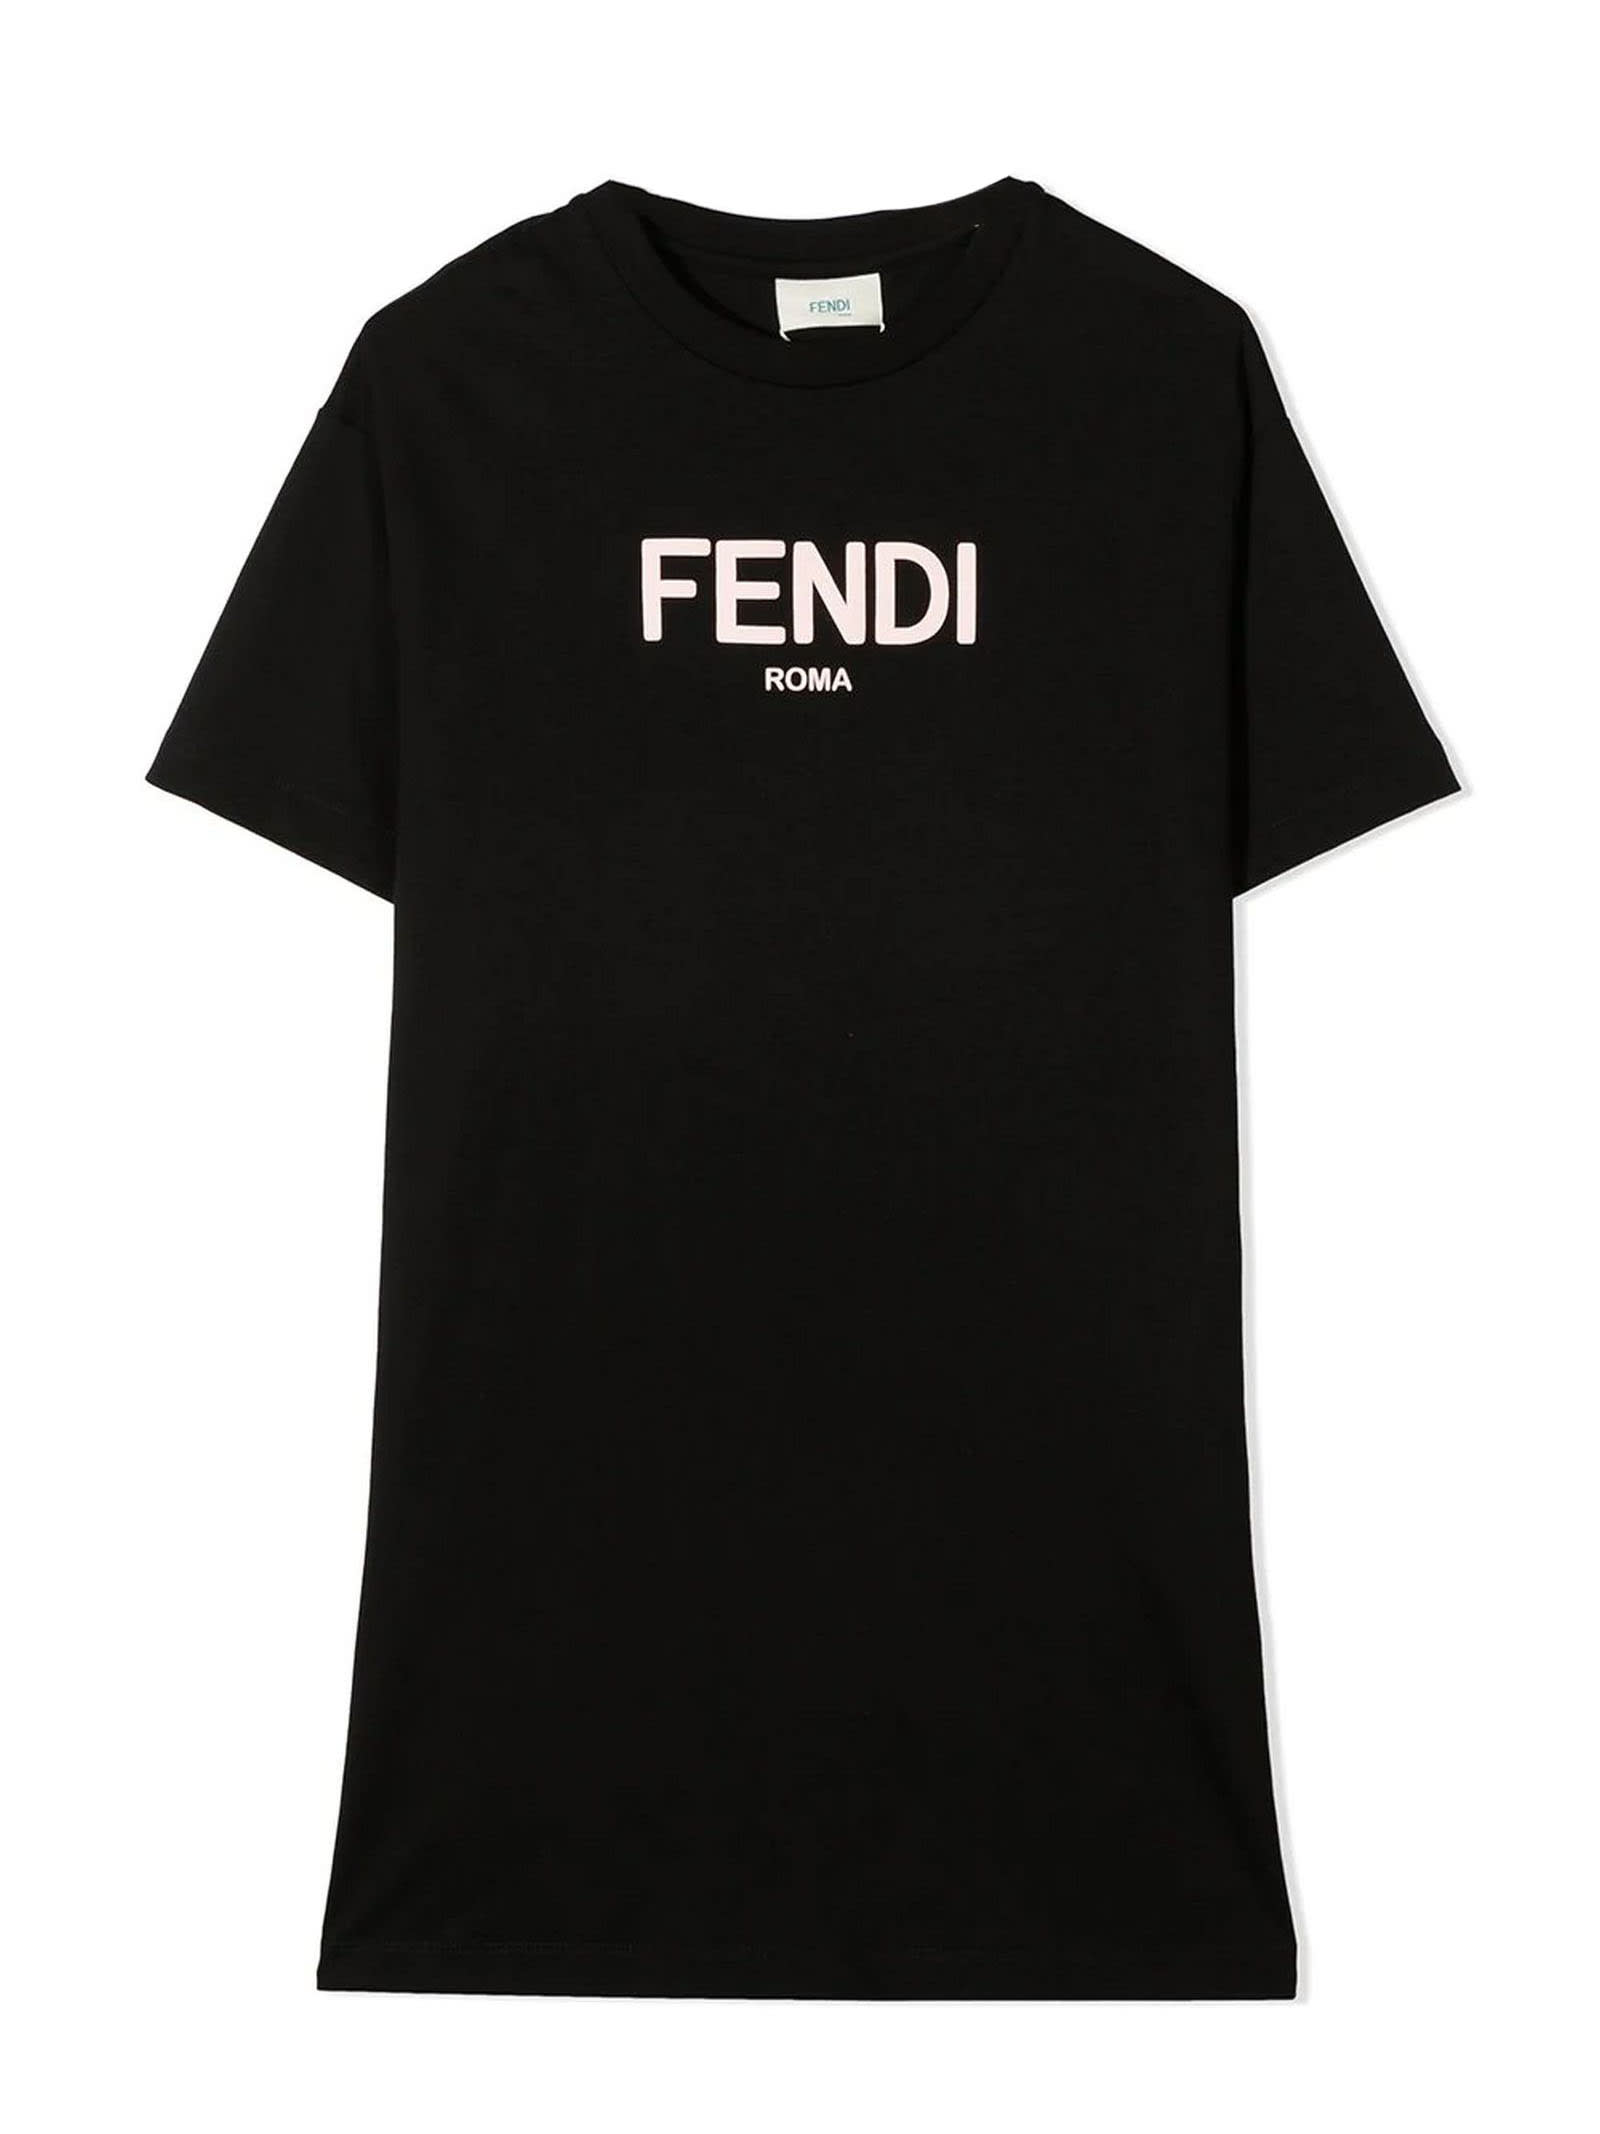 Fendi Black Cotton T-shirt Dress